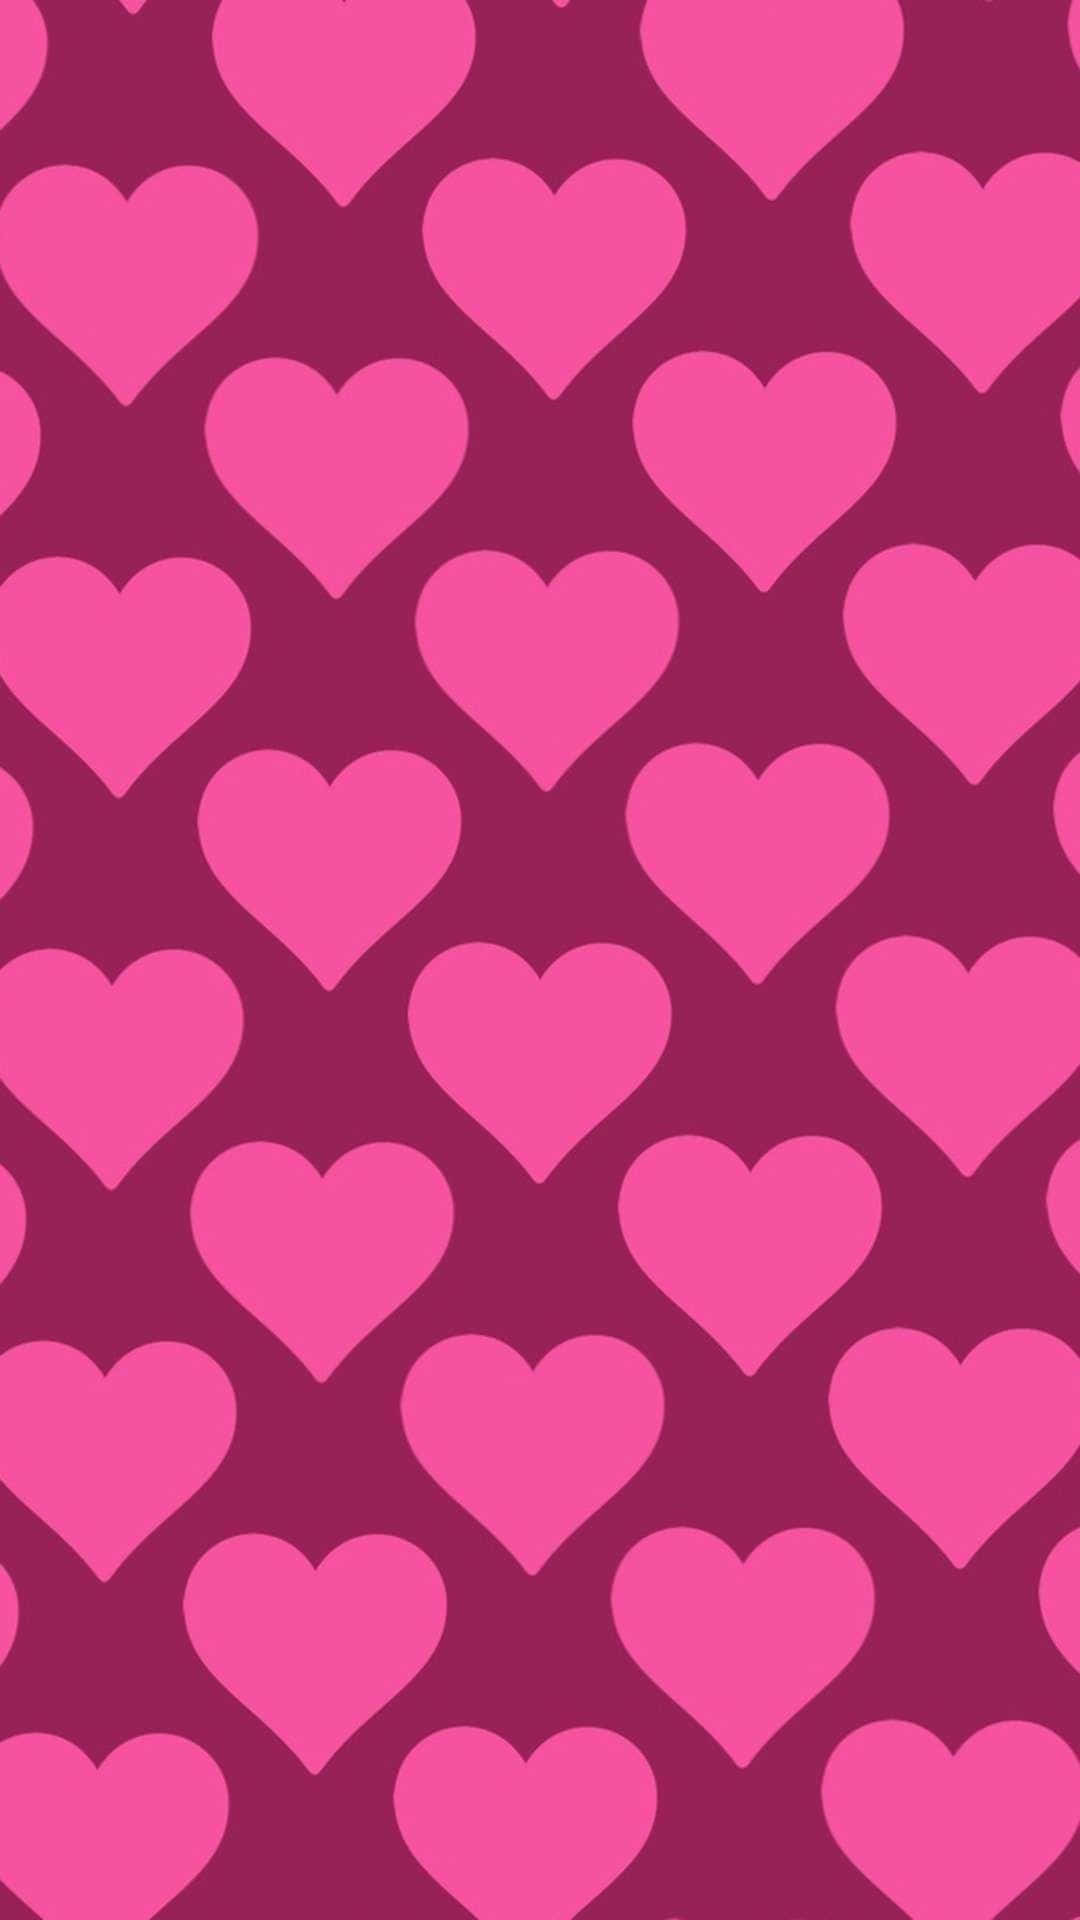 Pretty Pattern Pink Hearts Iphone Wallpaper